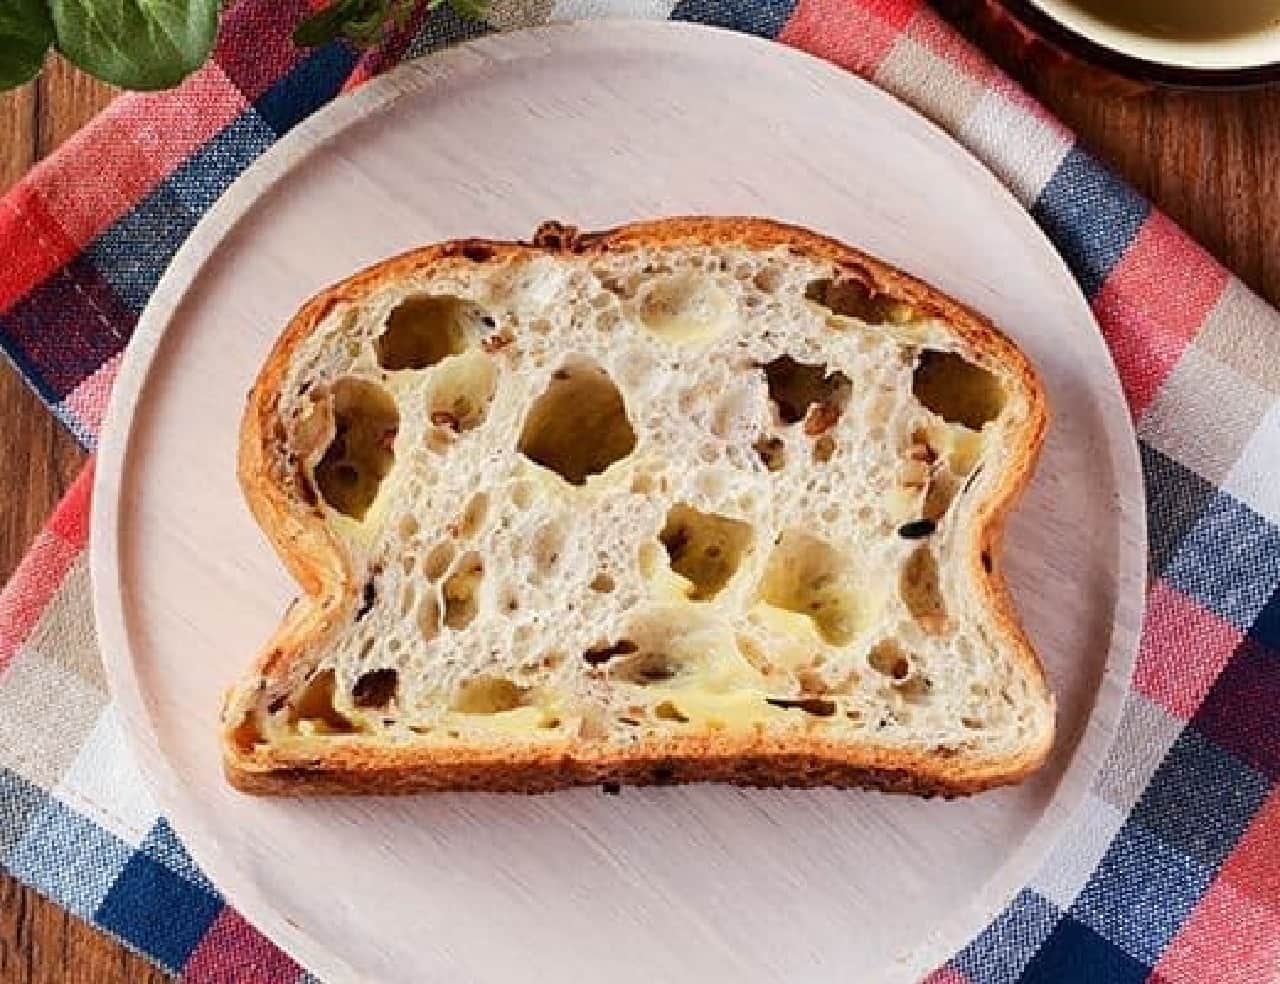 Lawson "Machino Bread Funyamochi Five Grains Bread Walnuts and Cheese"